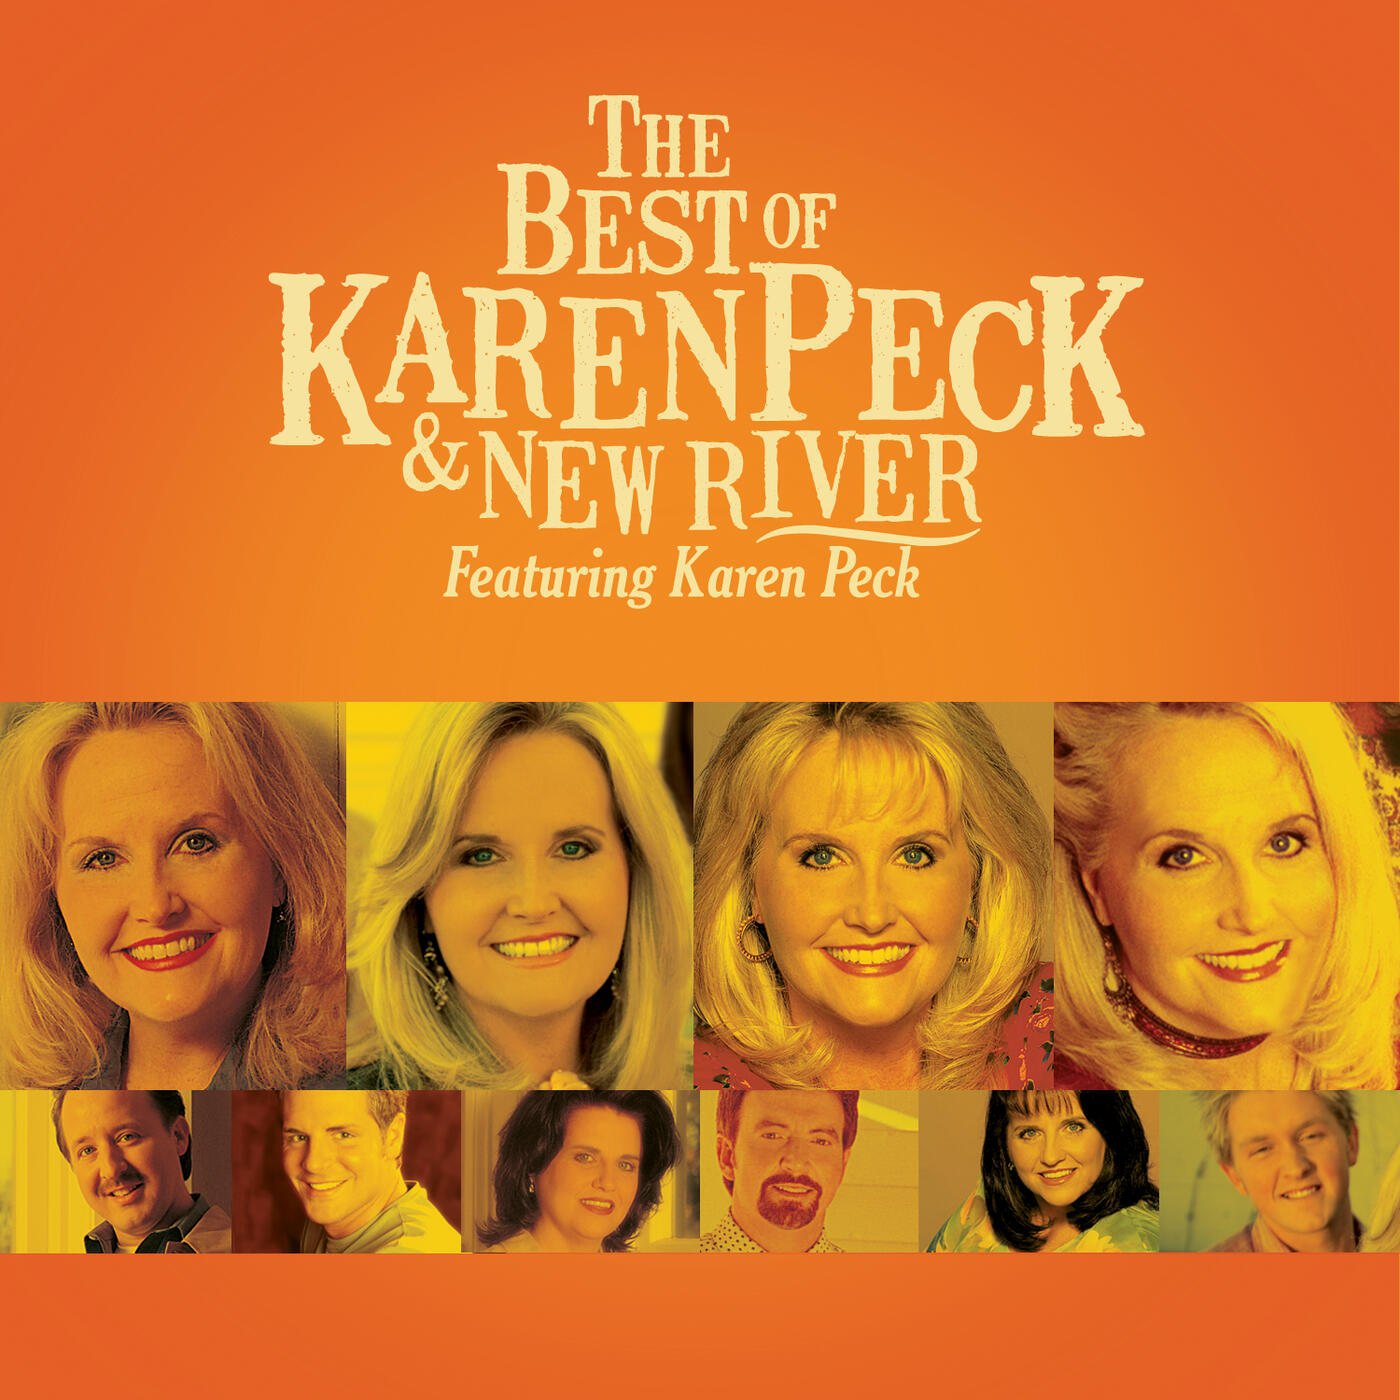 Karen Peck & New River The Best Of Karen Peck And New River iHeart